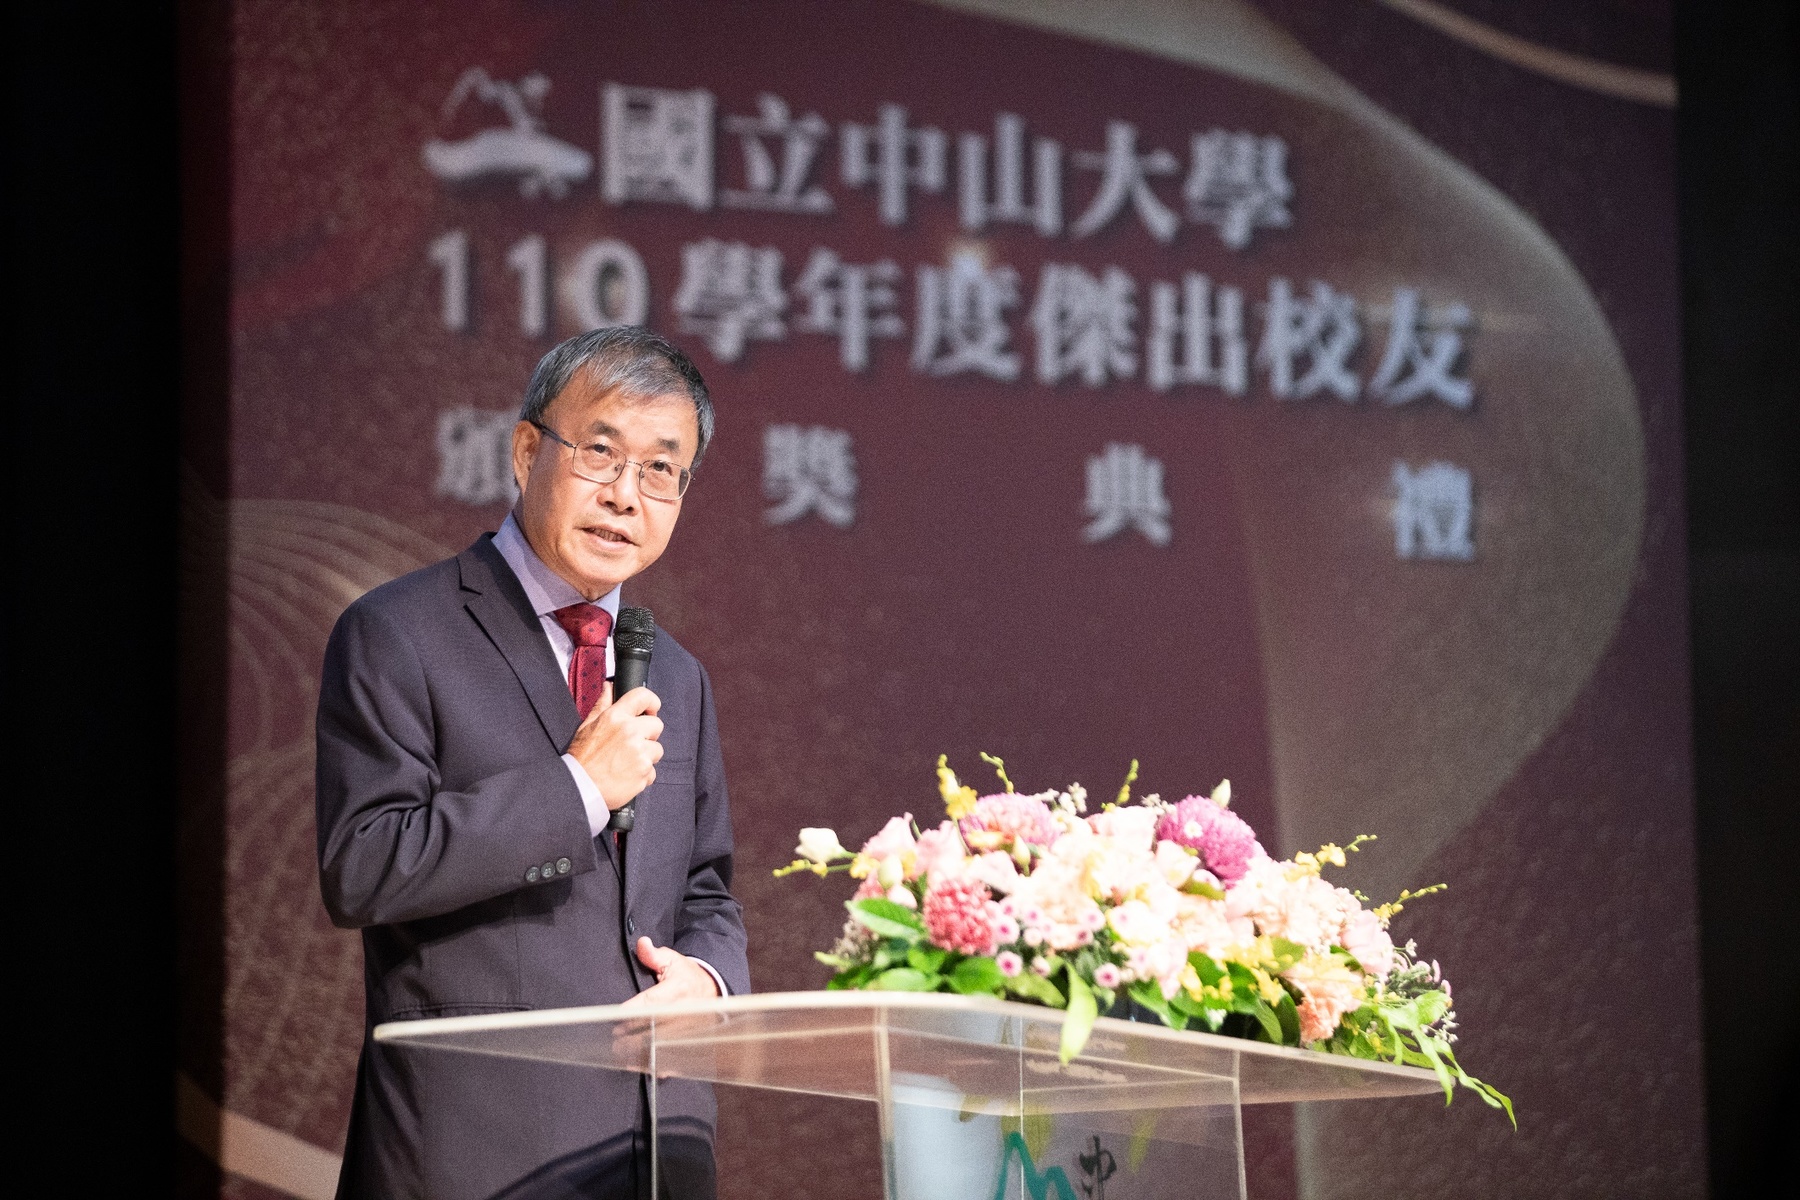 NSYSU President Ying-Yao Cheng